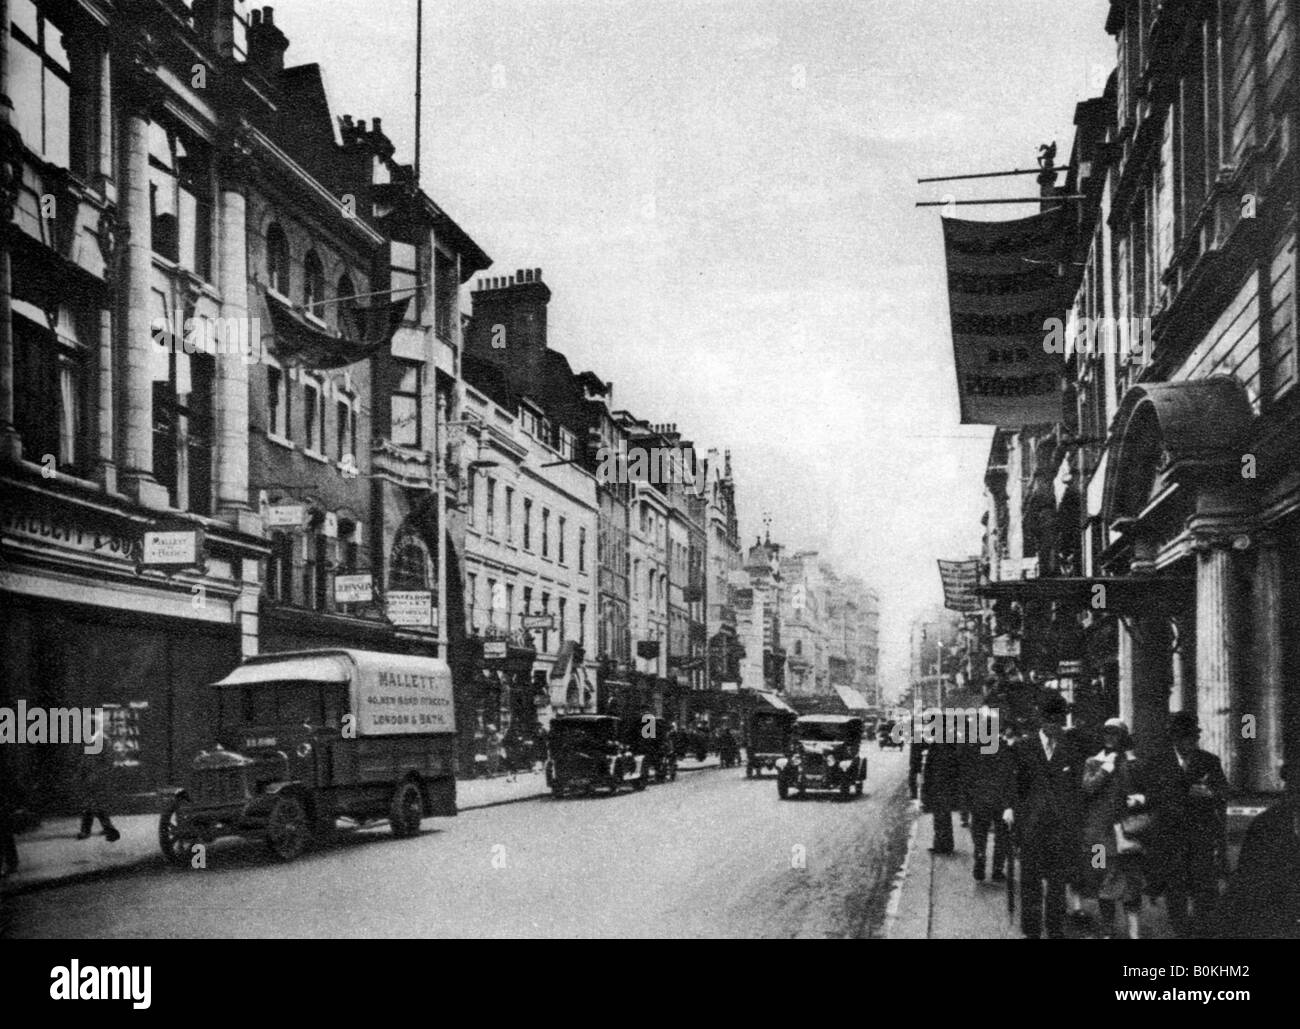 File:1 Old Bond Street London.jpg - Wikimedia Commons